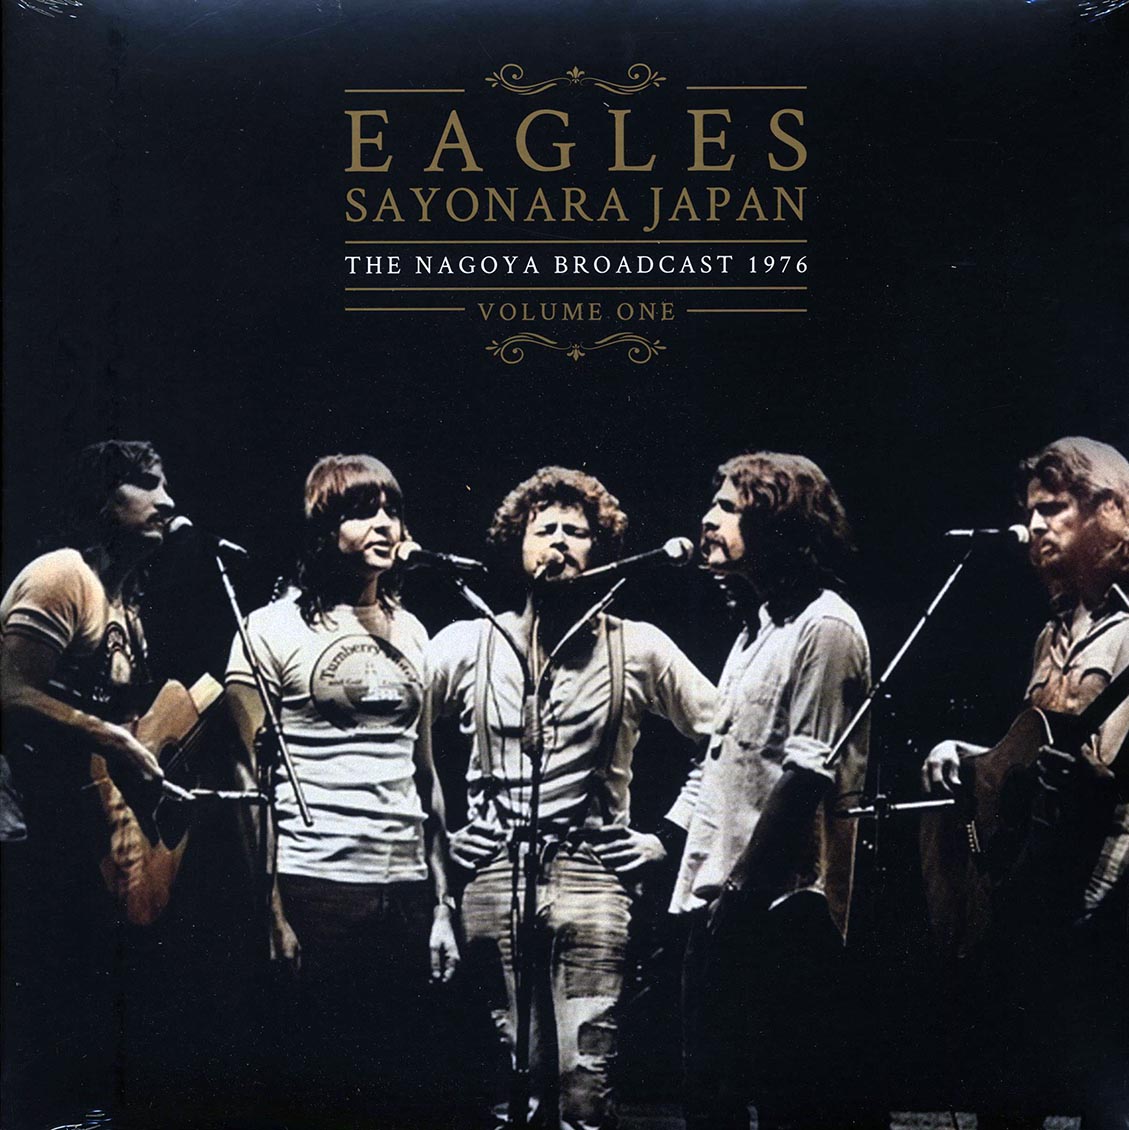 Eagles - Sayonara Japan Volume 1: The Nagoya Broadcast 1976